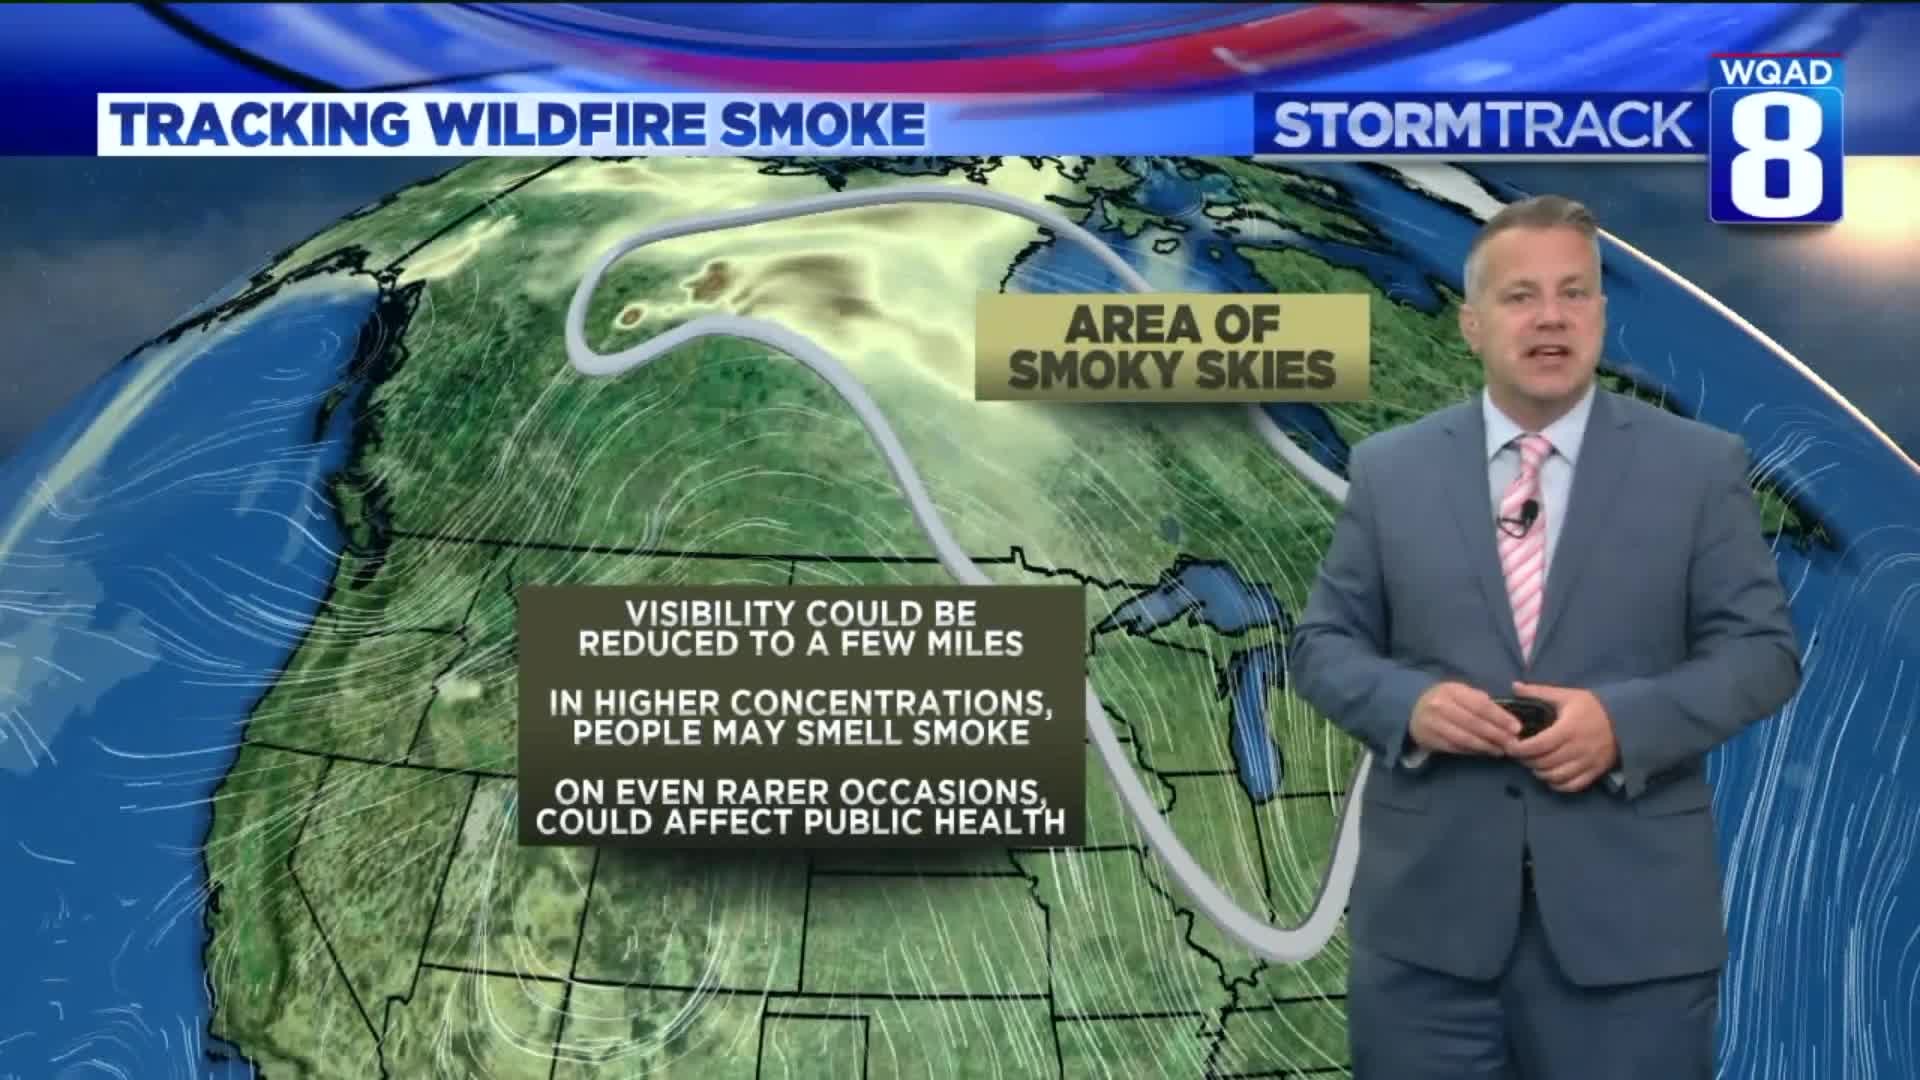 Eric is tracking smoke this morning